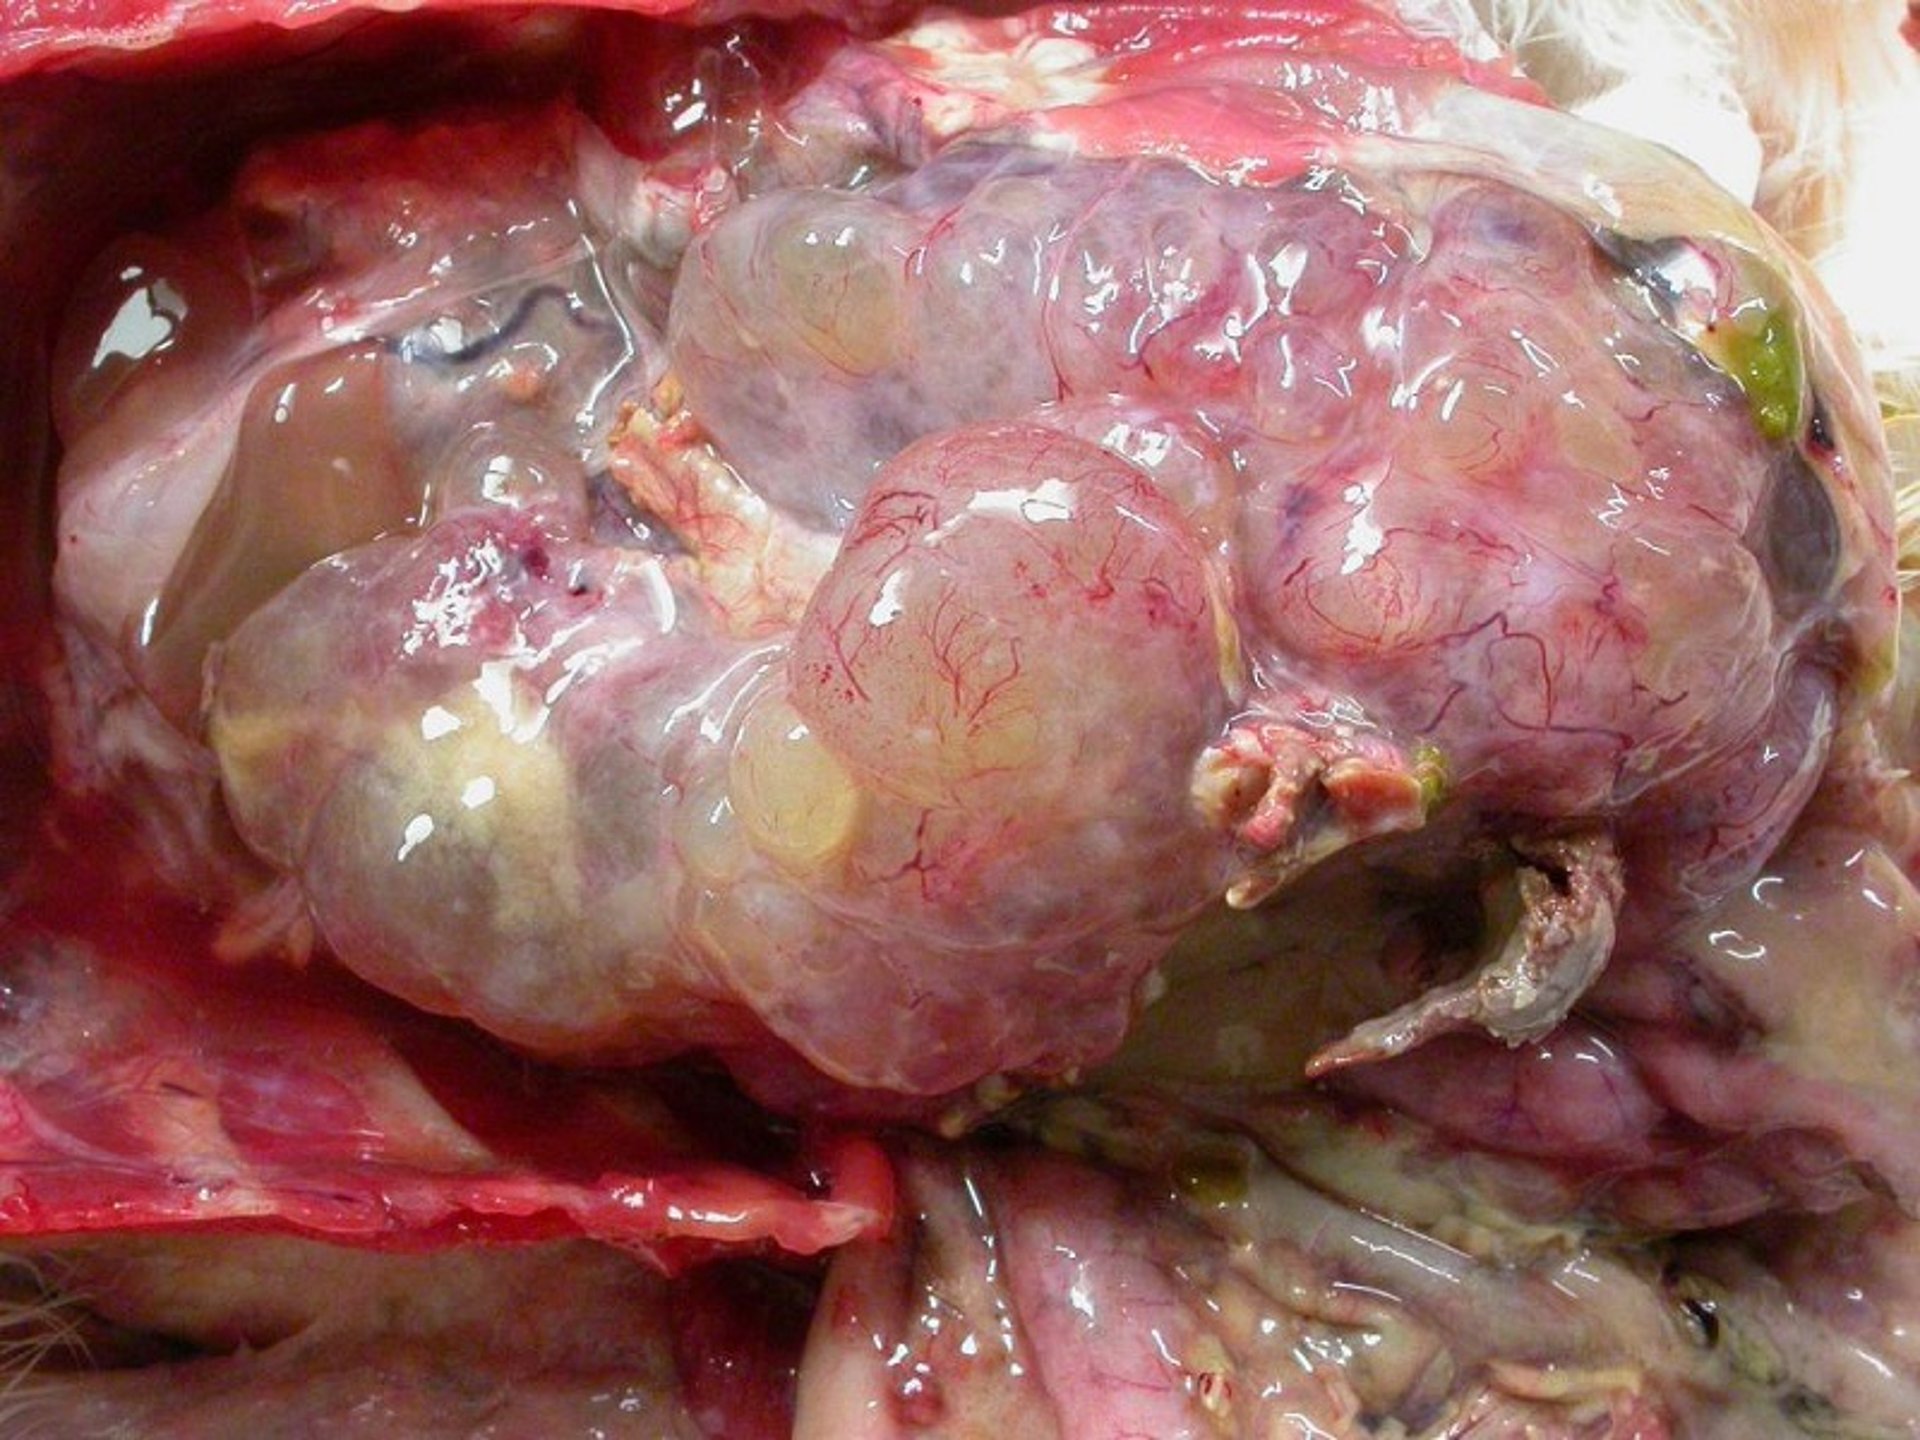 Ovarian tumor, cockatoo